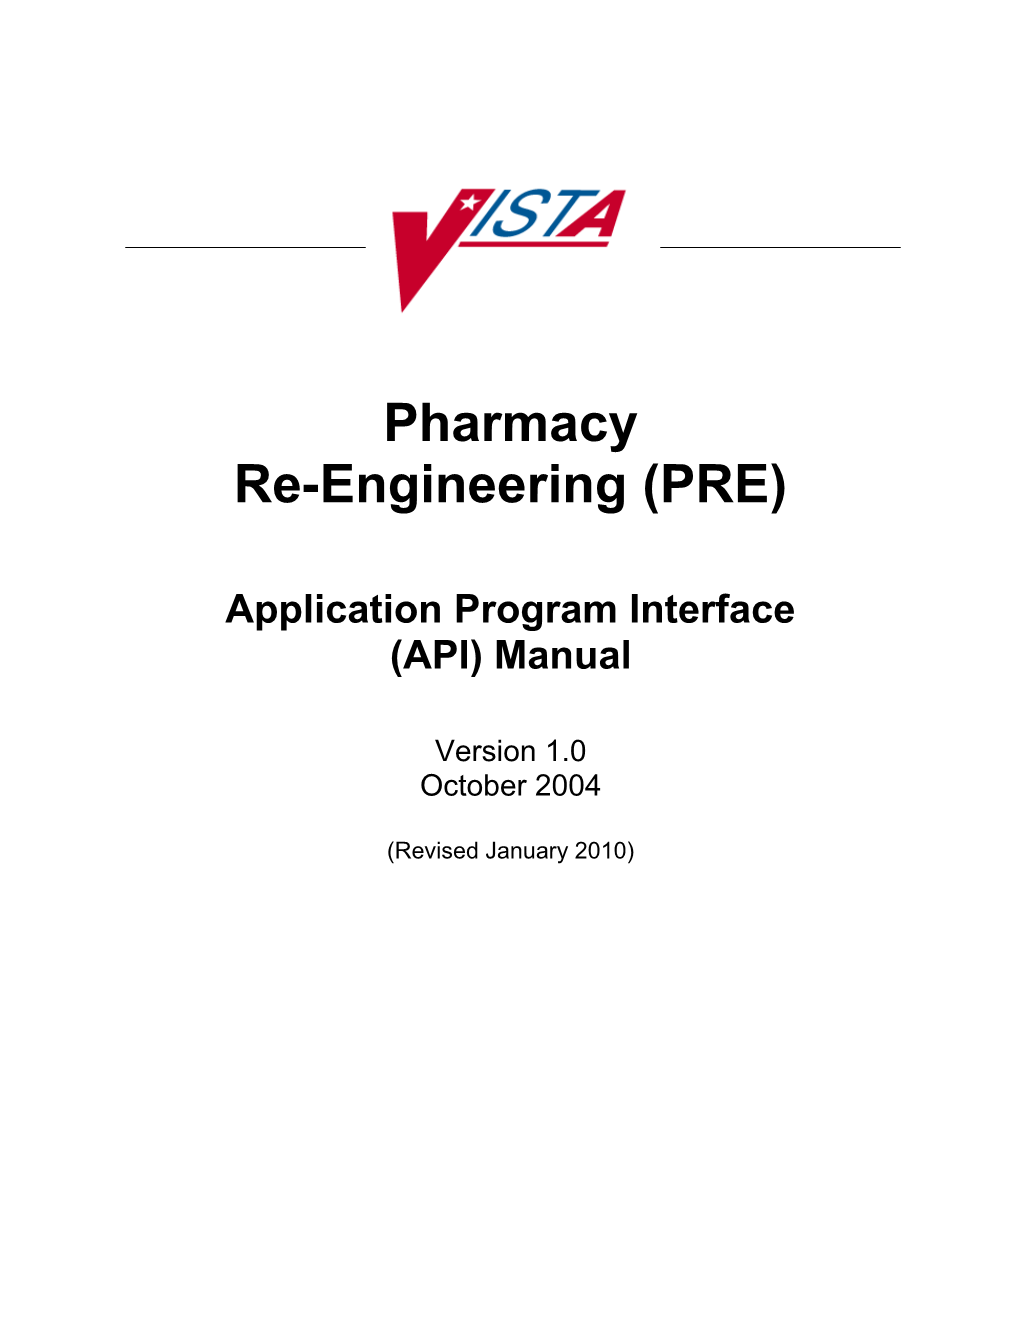 Department of Veterans Affairs Pharmacy Re-Engineering (PRE) Application Program Interface